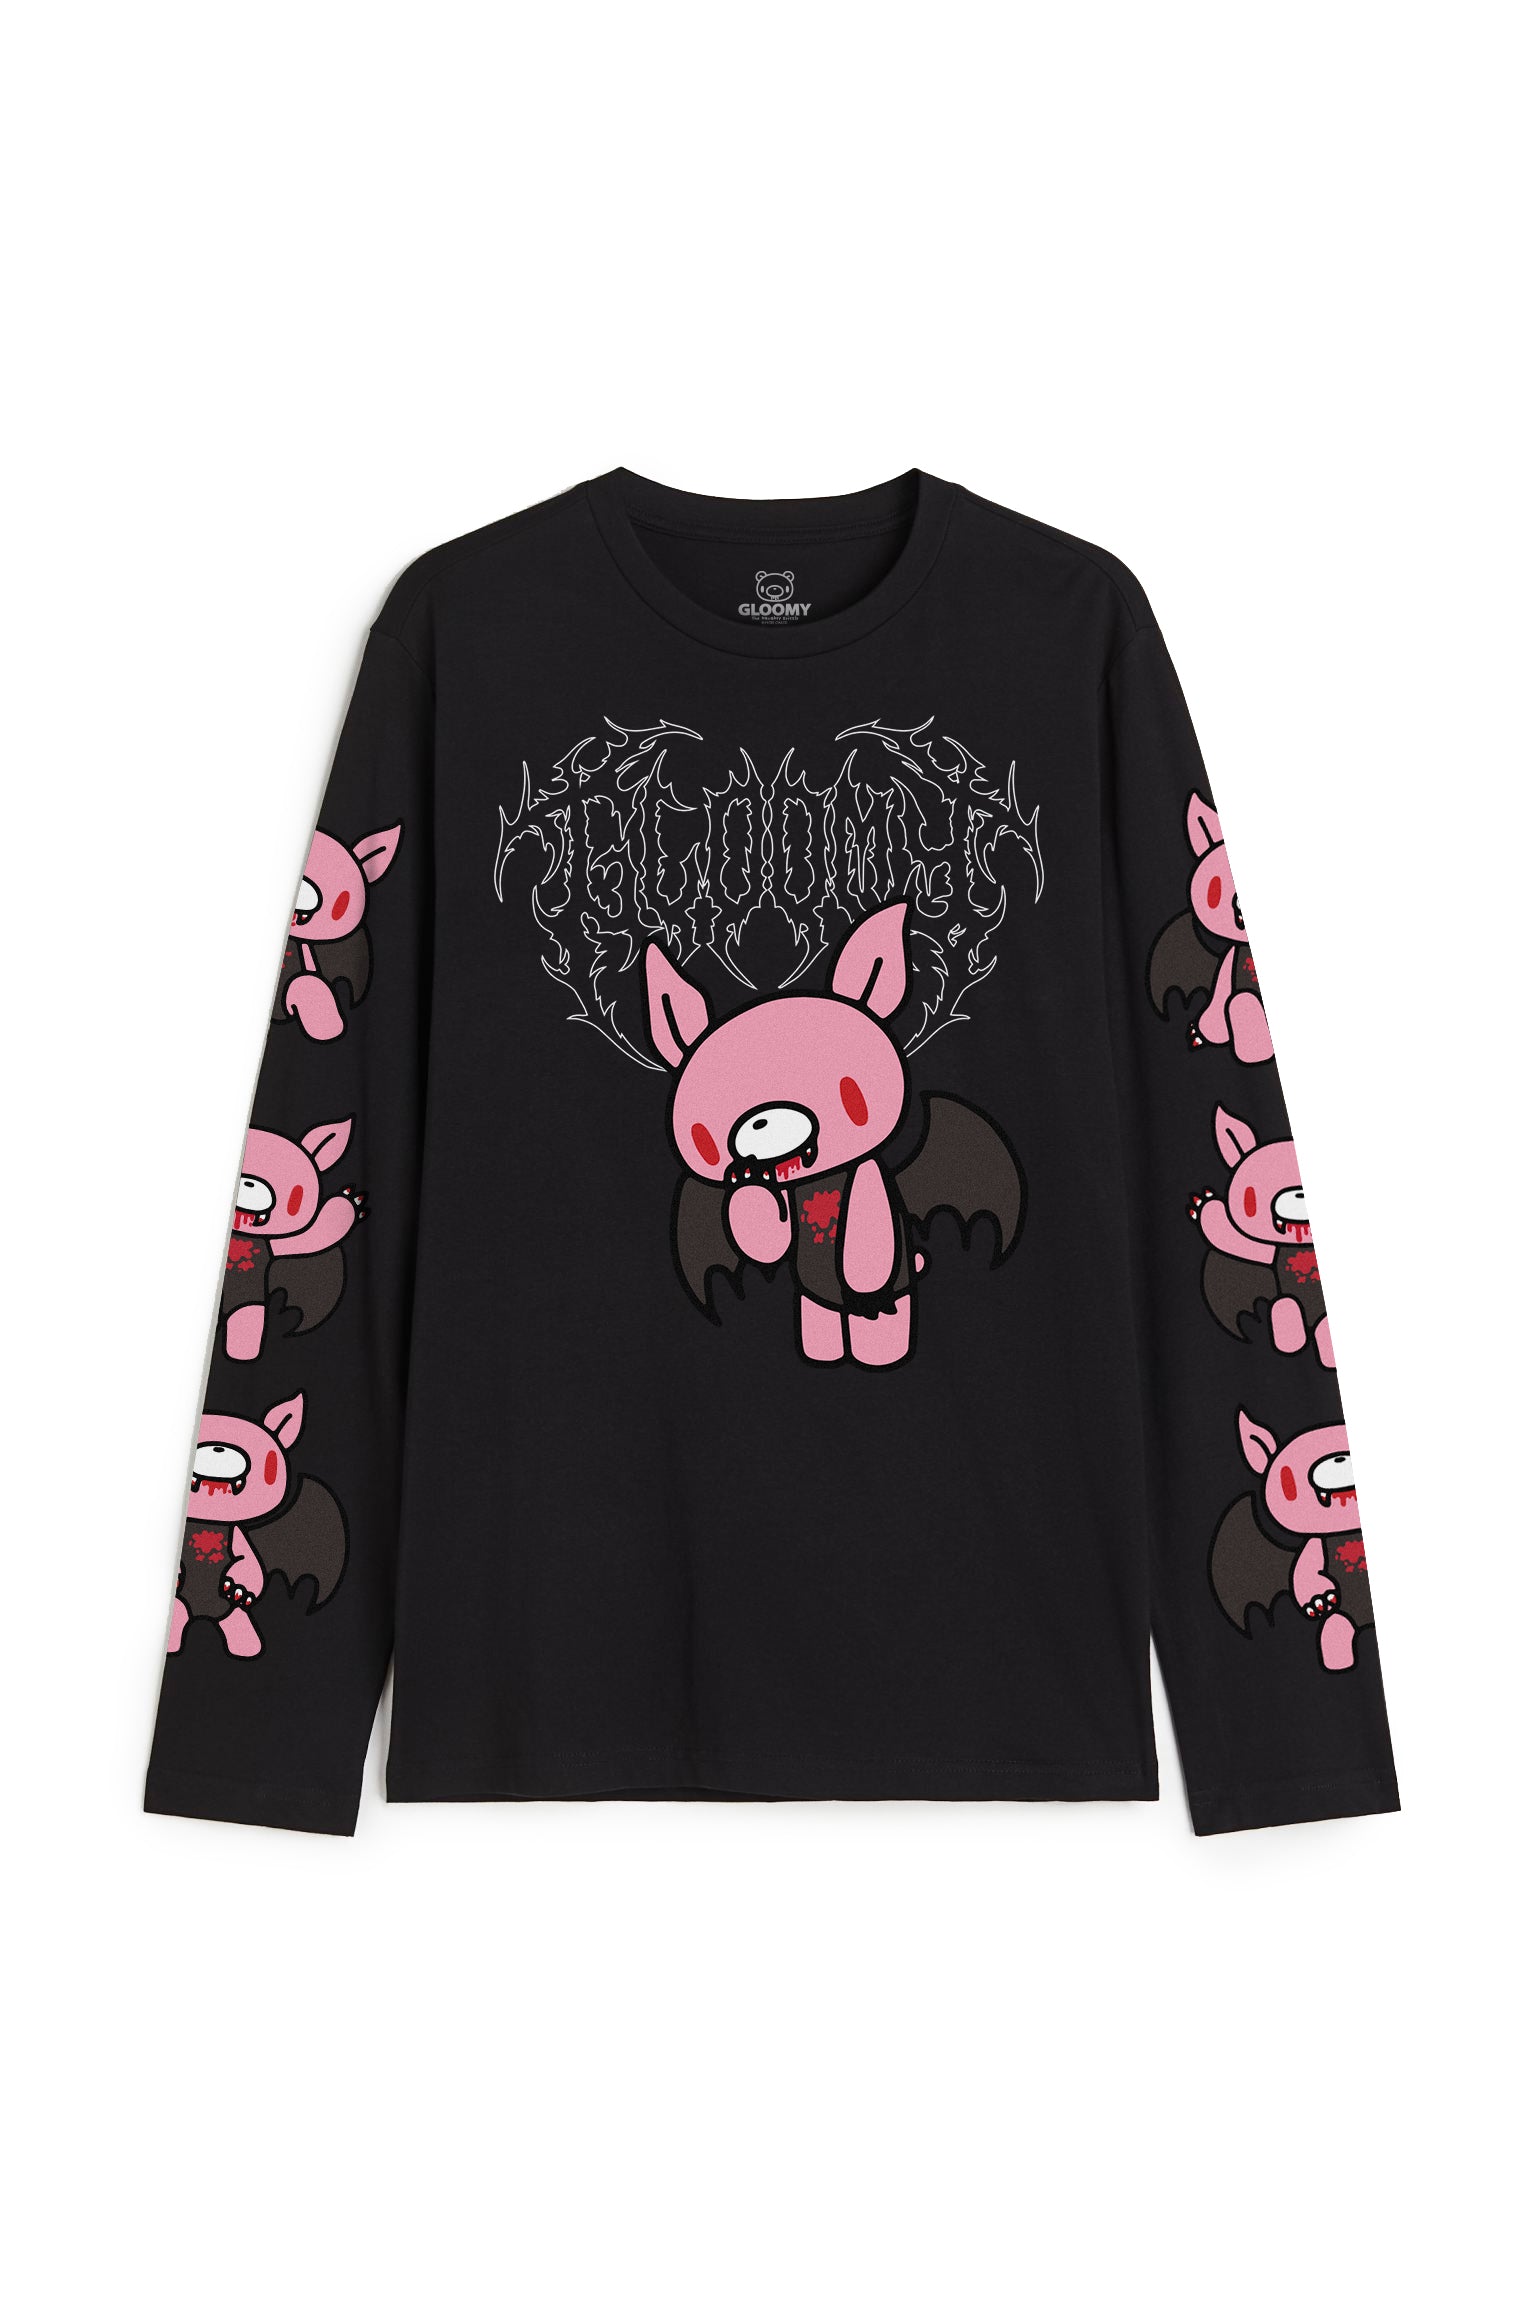 Super Unofficial x Gloomy Bear - Bat LongSleeve Shirt